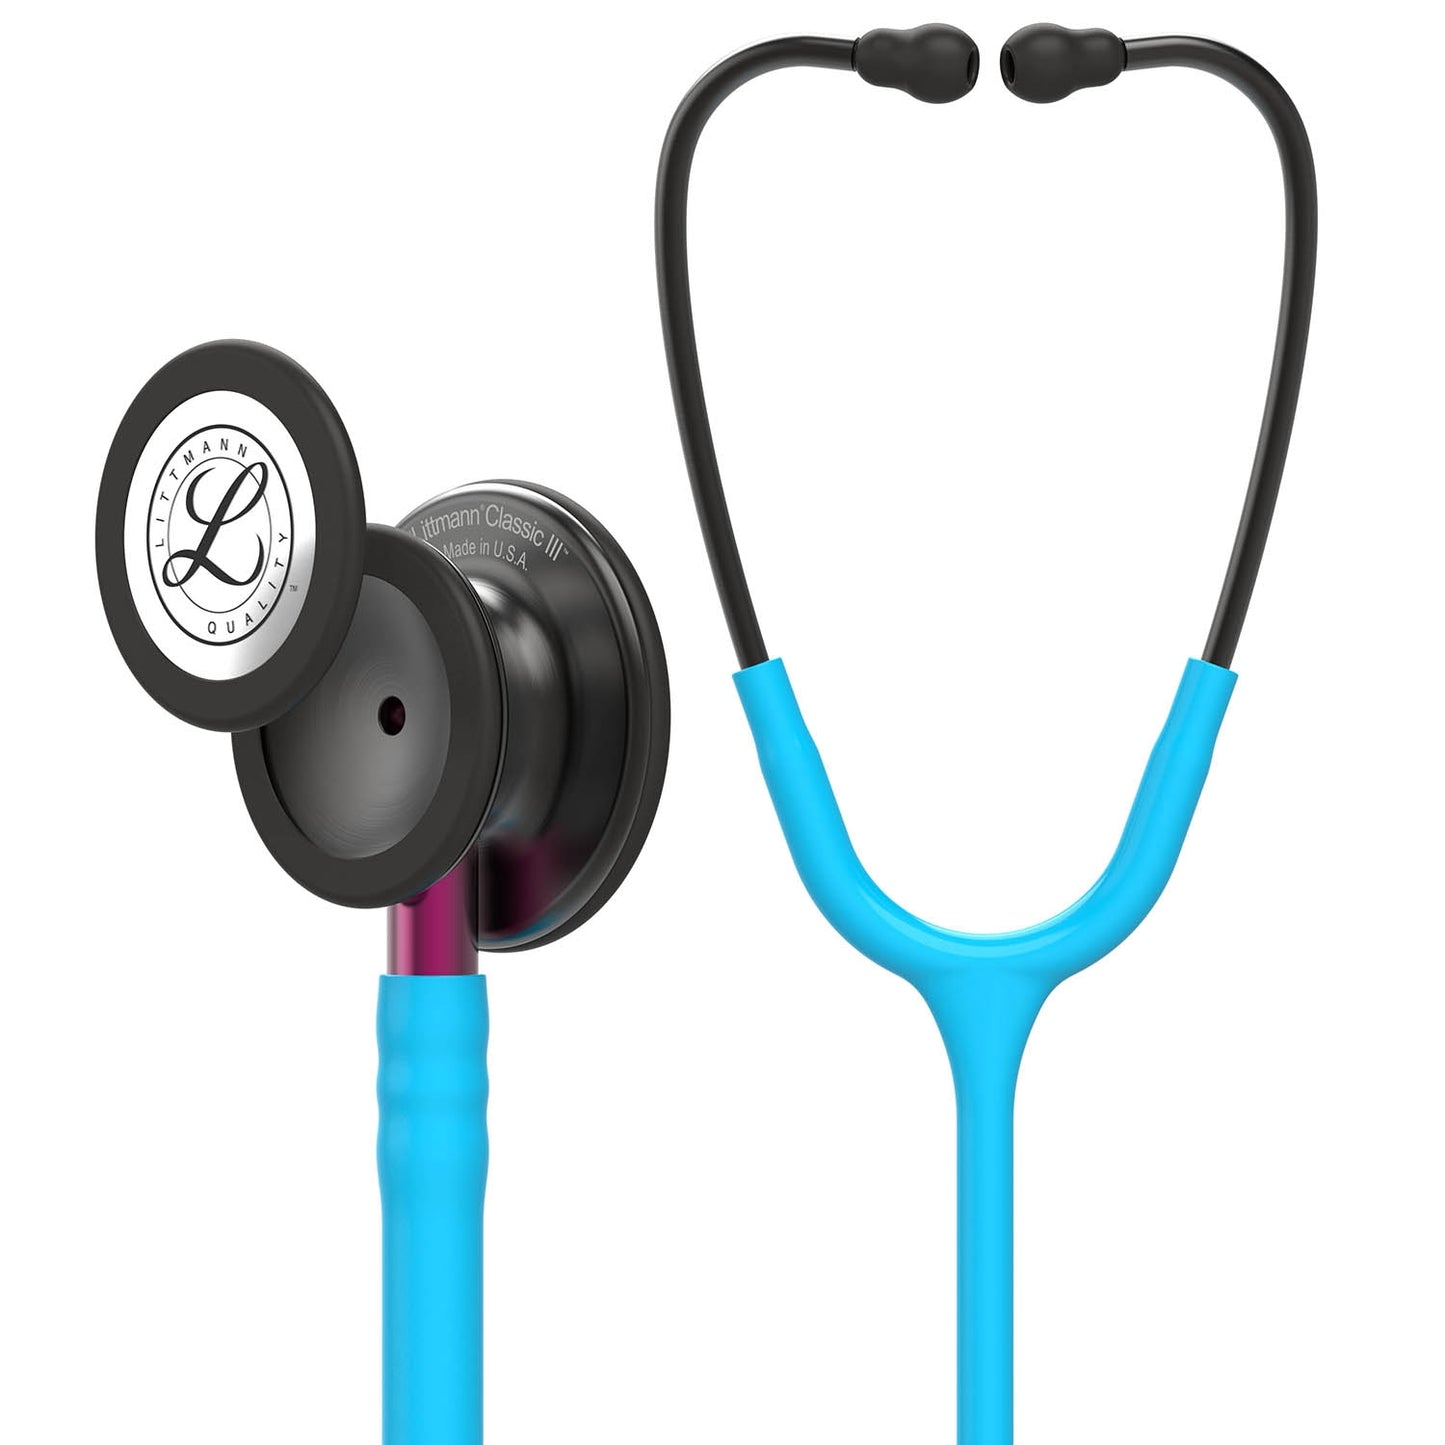 Littmann Classic III Monitoring Stethoscope: Smoke & Turquoise - Pink Stem 5872 Student Deal 3M Littmann